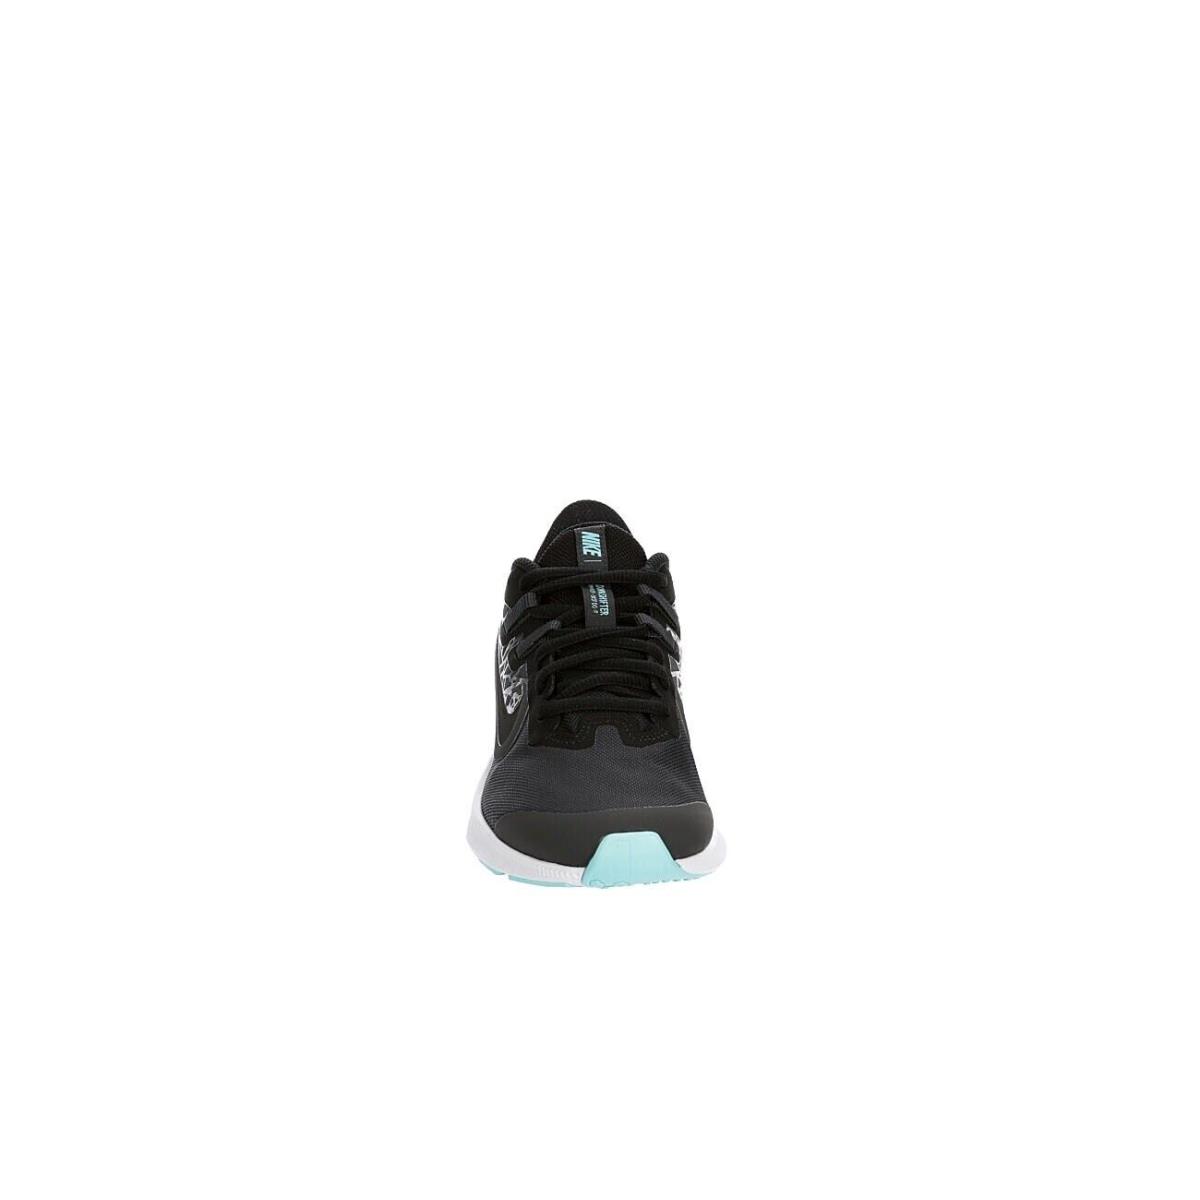 Nike shoes Downshifter Rebel - Anthracite/Black/Light Aqua 9